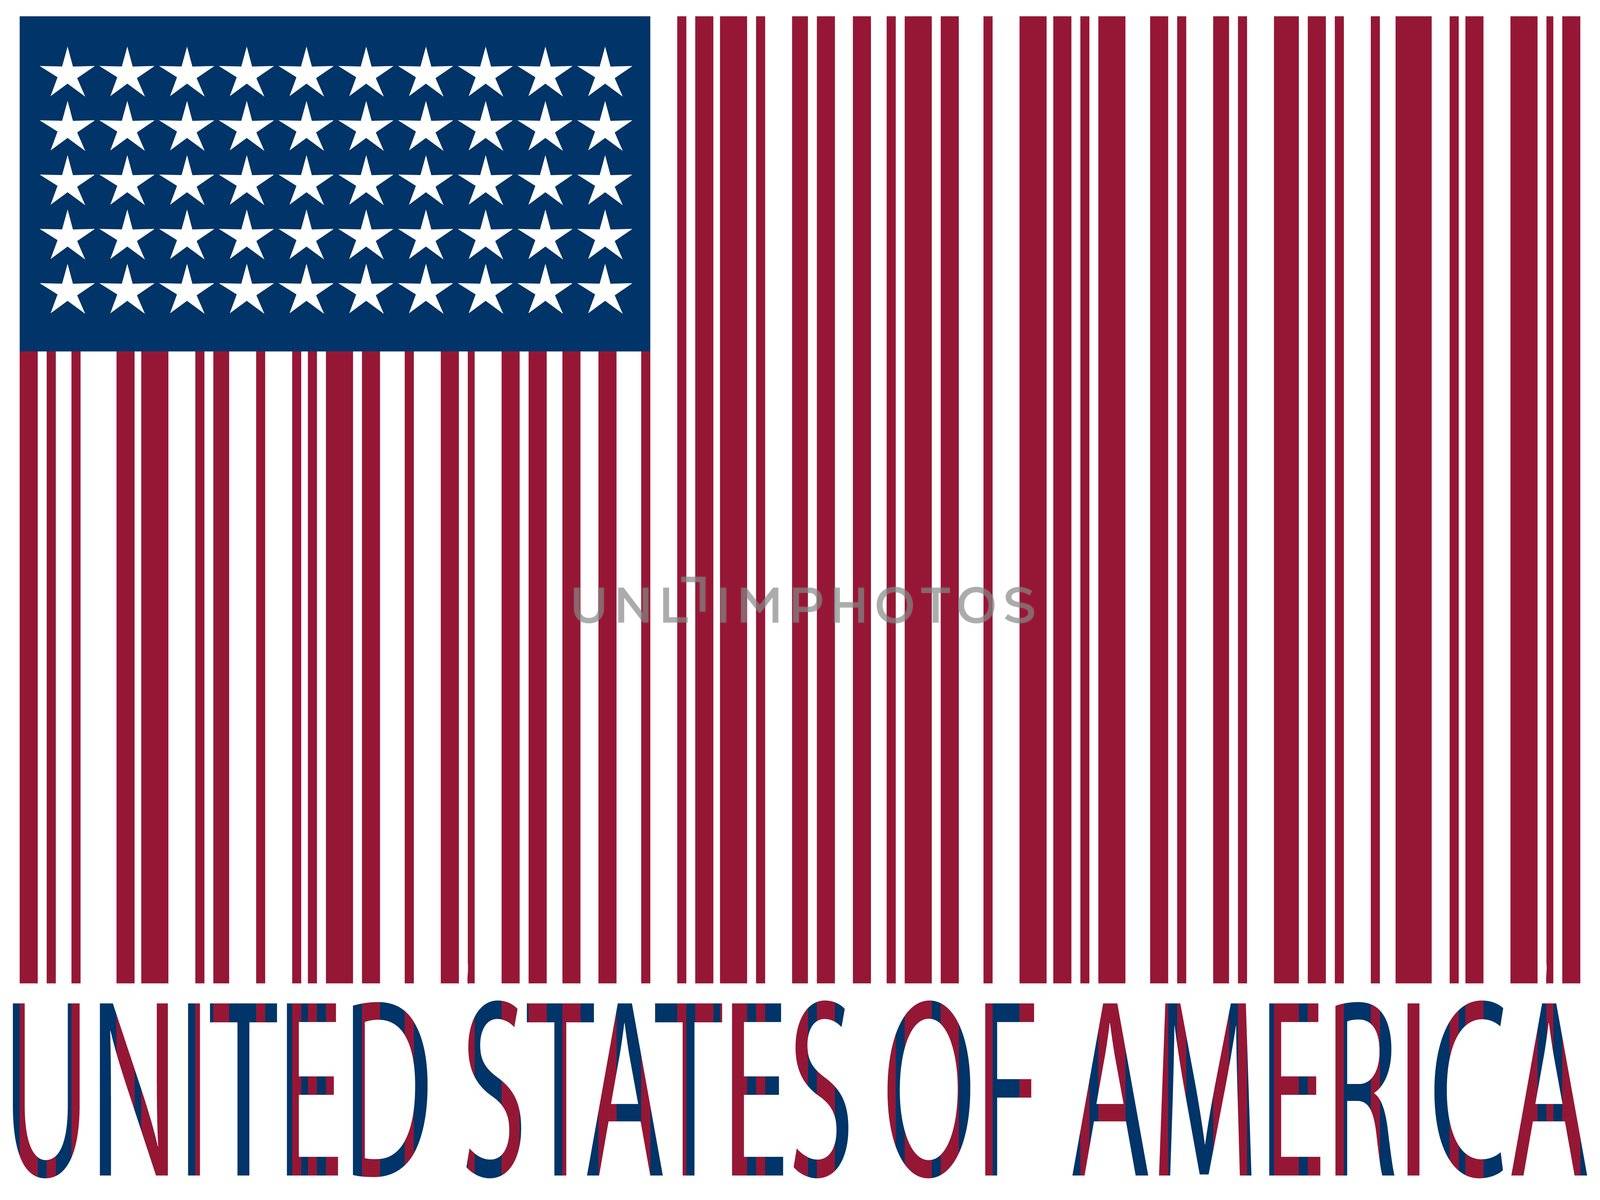 united states bar codes flag by robertosch